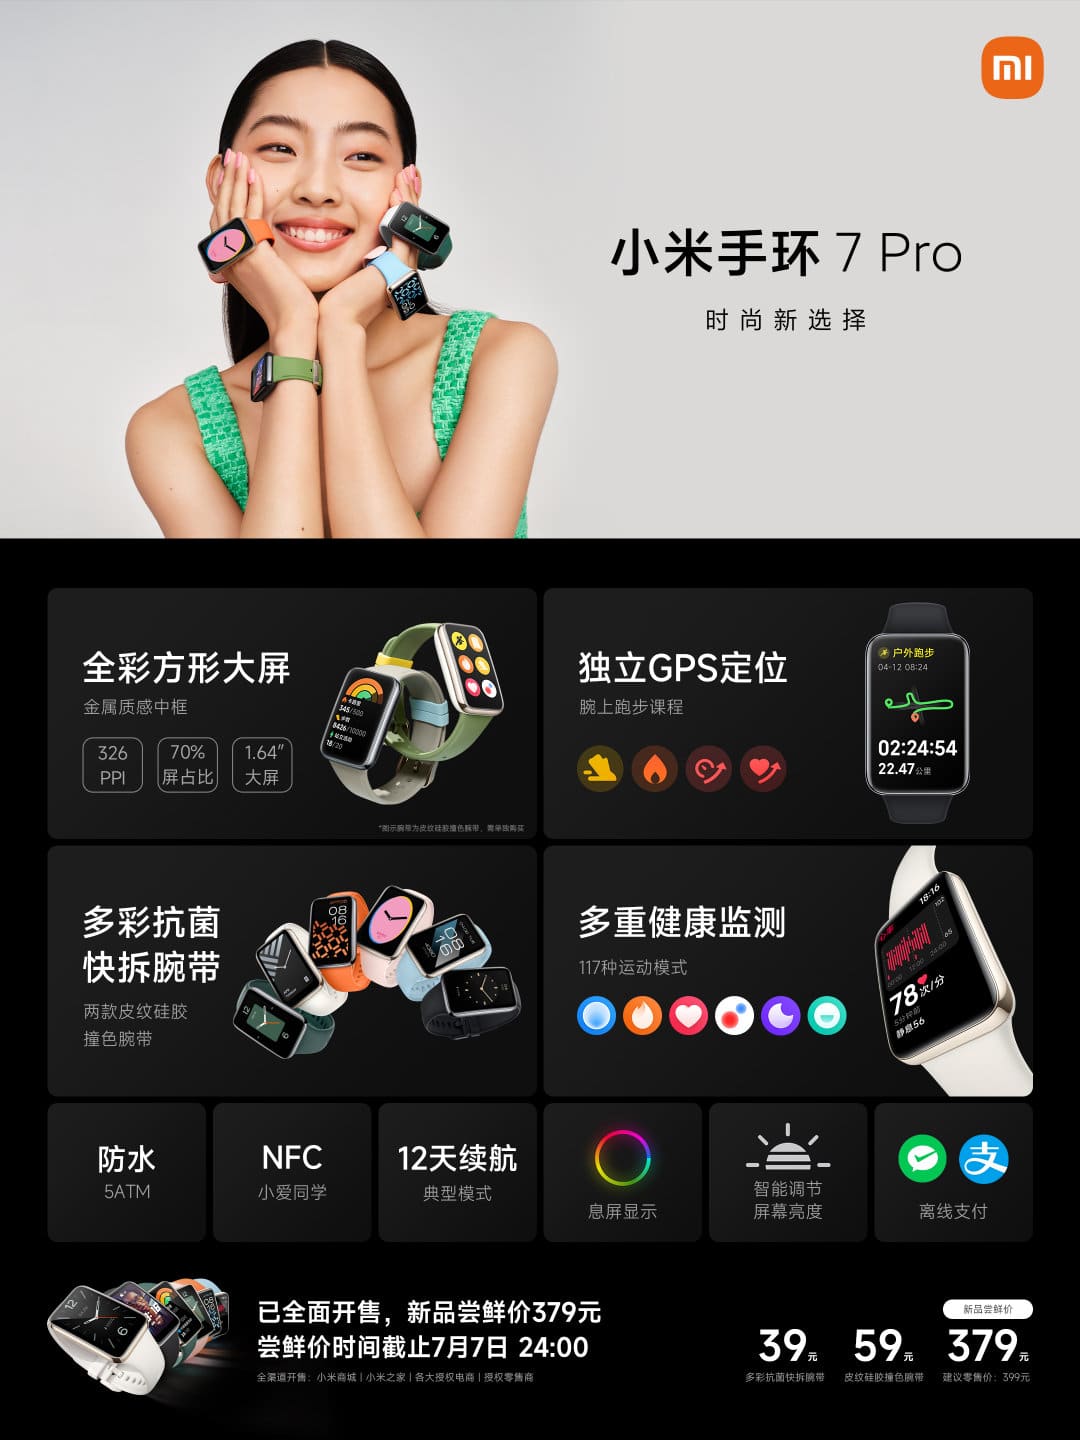 Xiaomi Mi Band 7 Pro specs